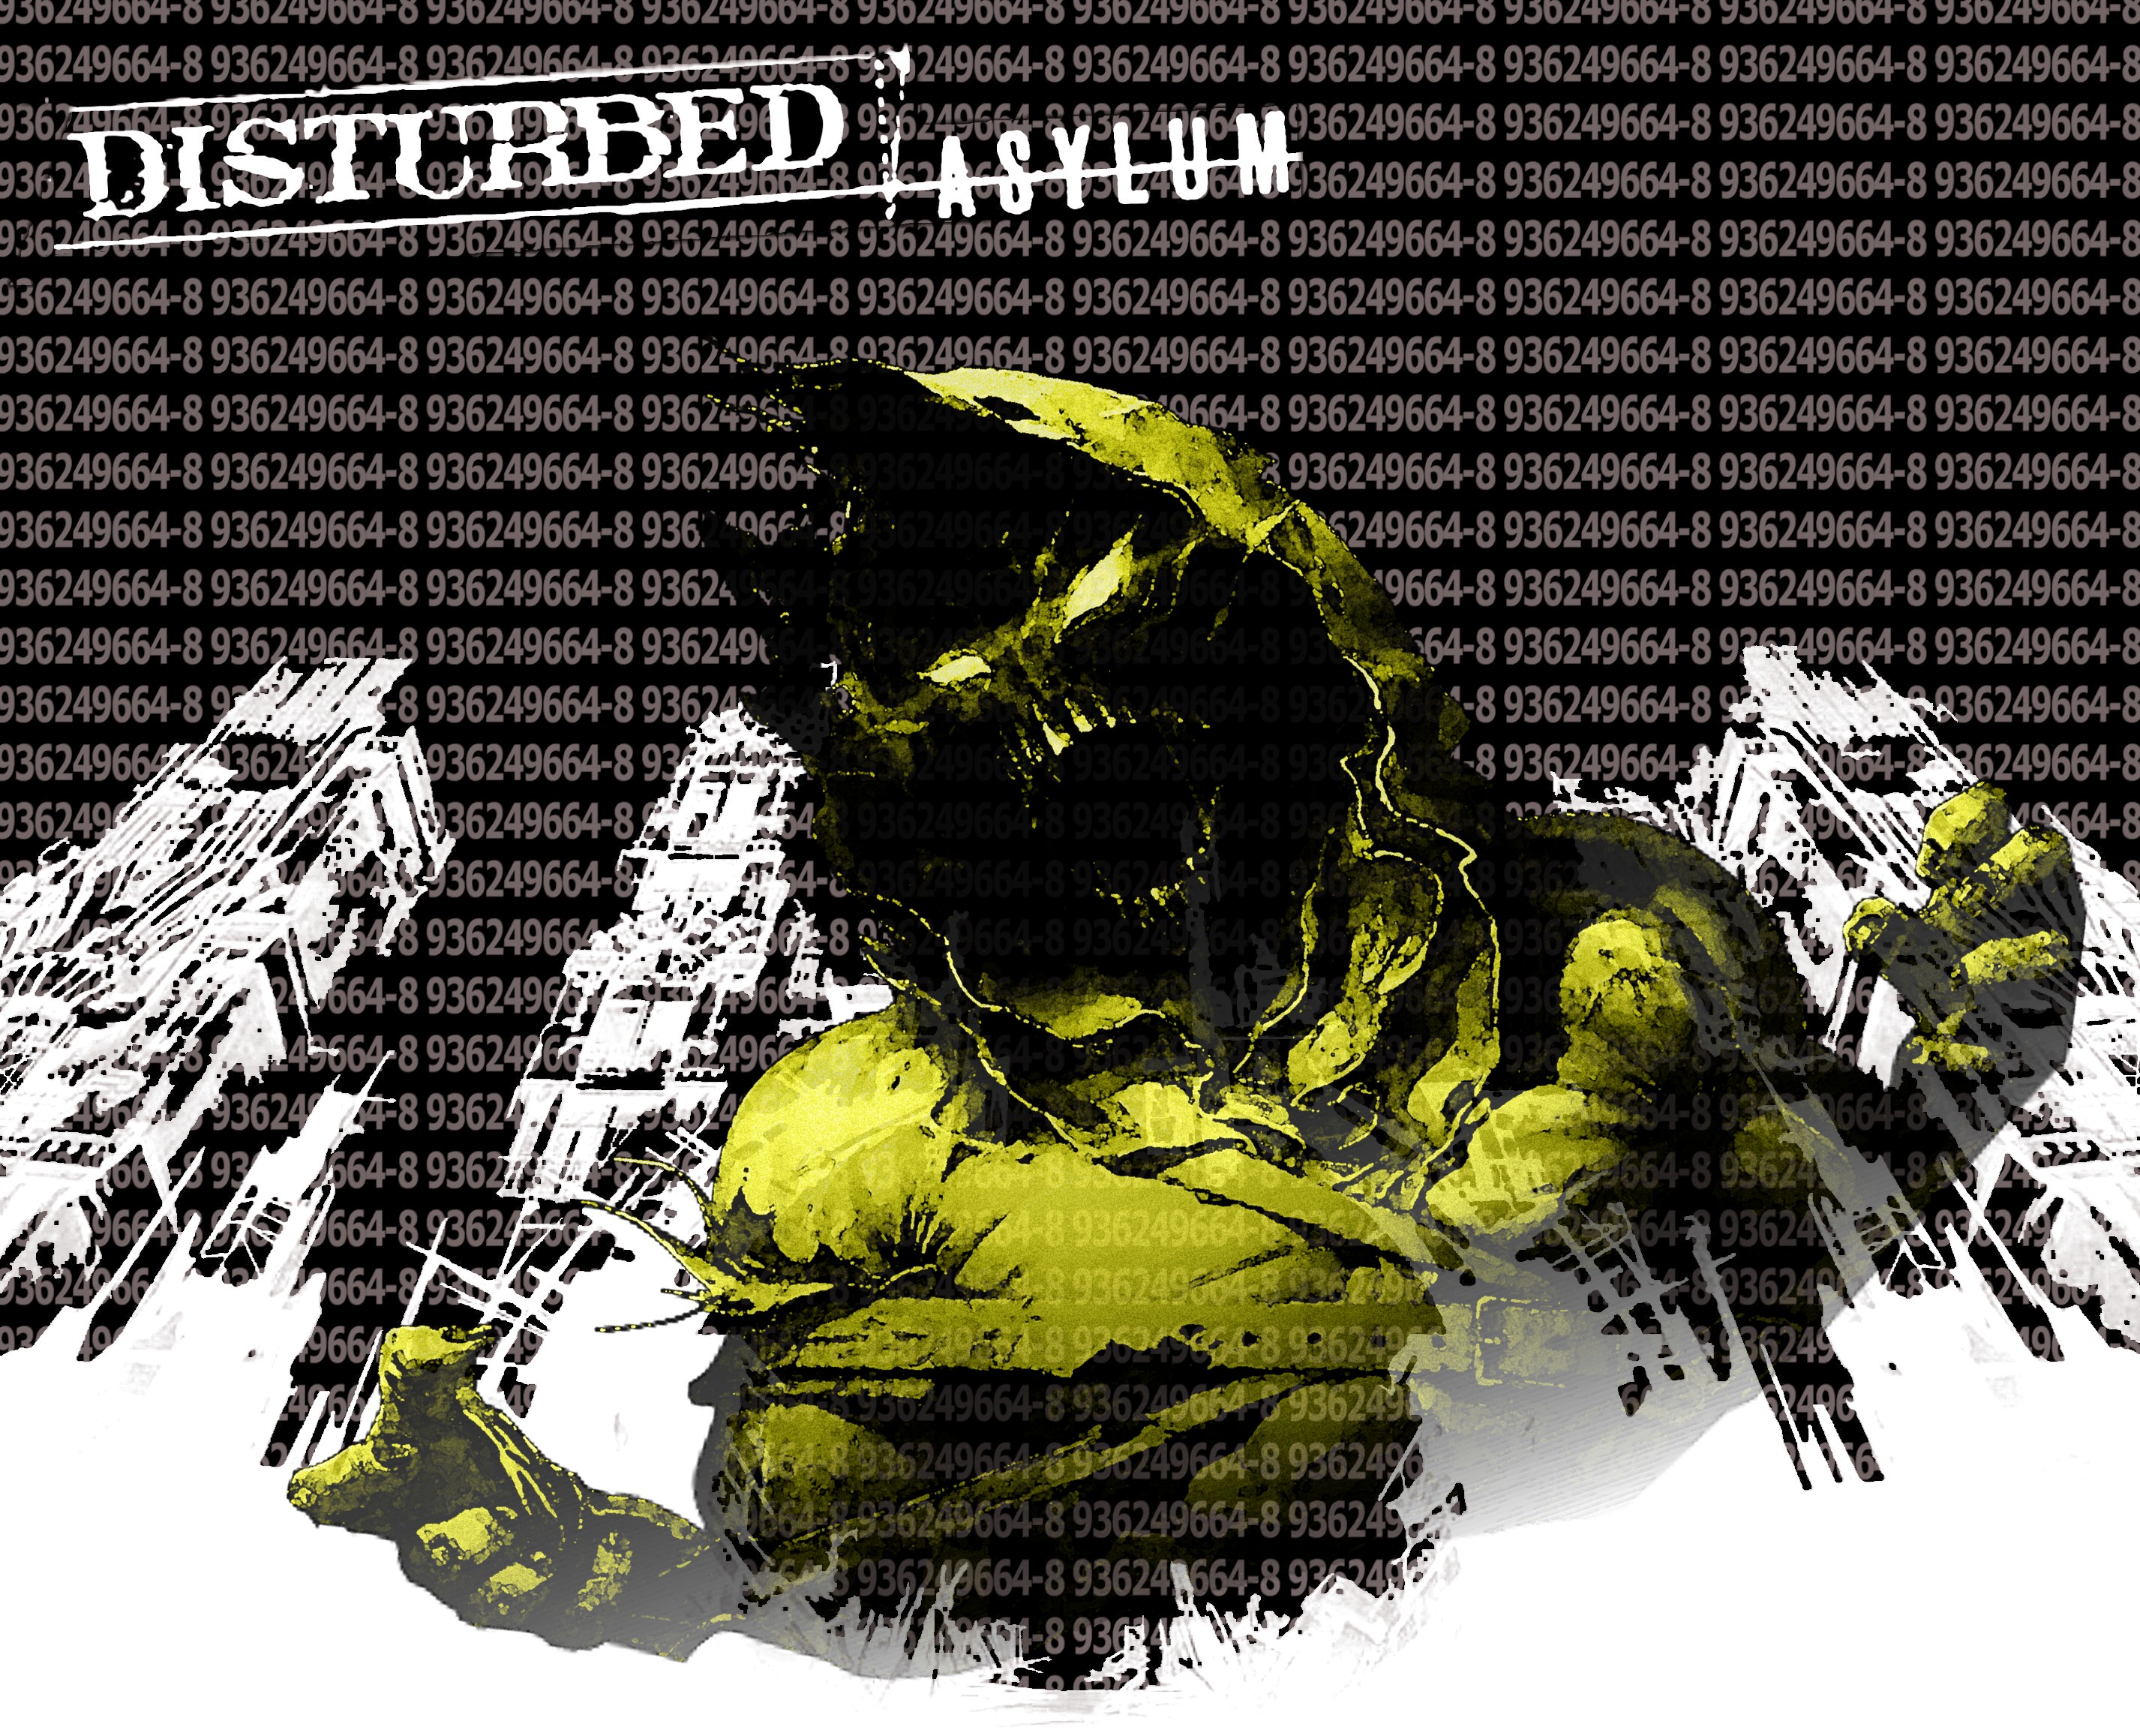 Disturbed Asylum Subliminal - HD desktop wallpaper by armdude: Disturbed (Band) theme.